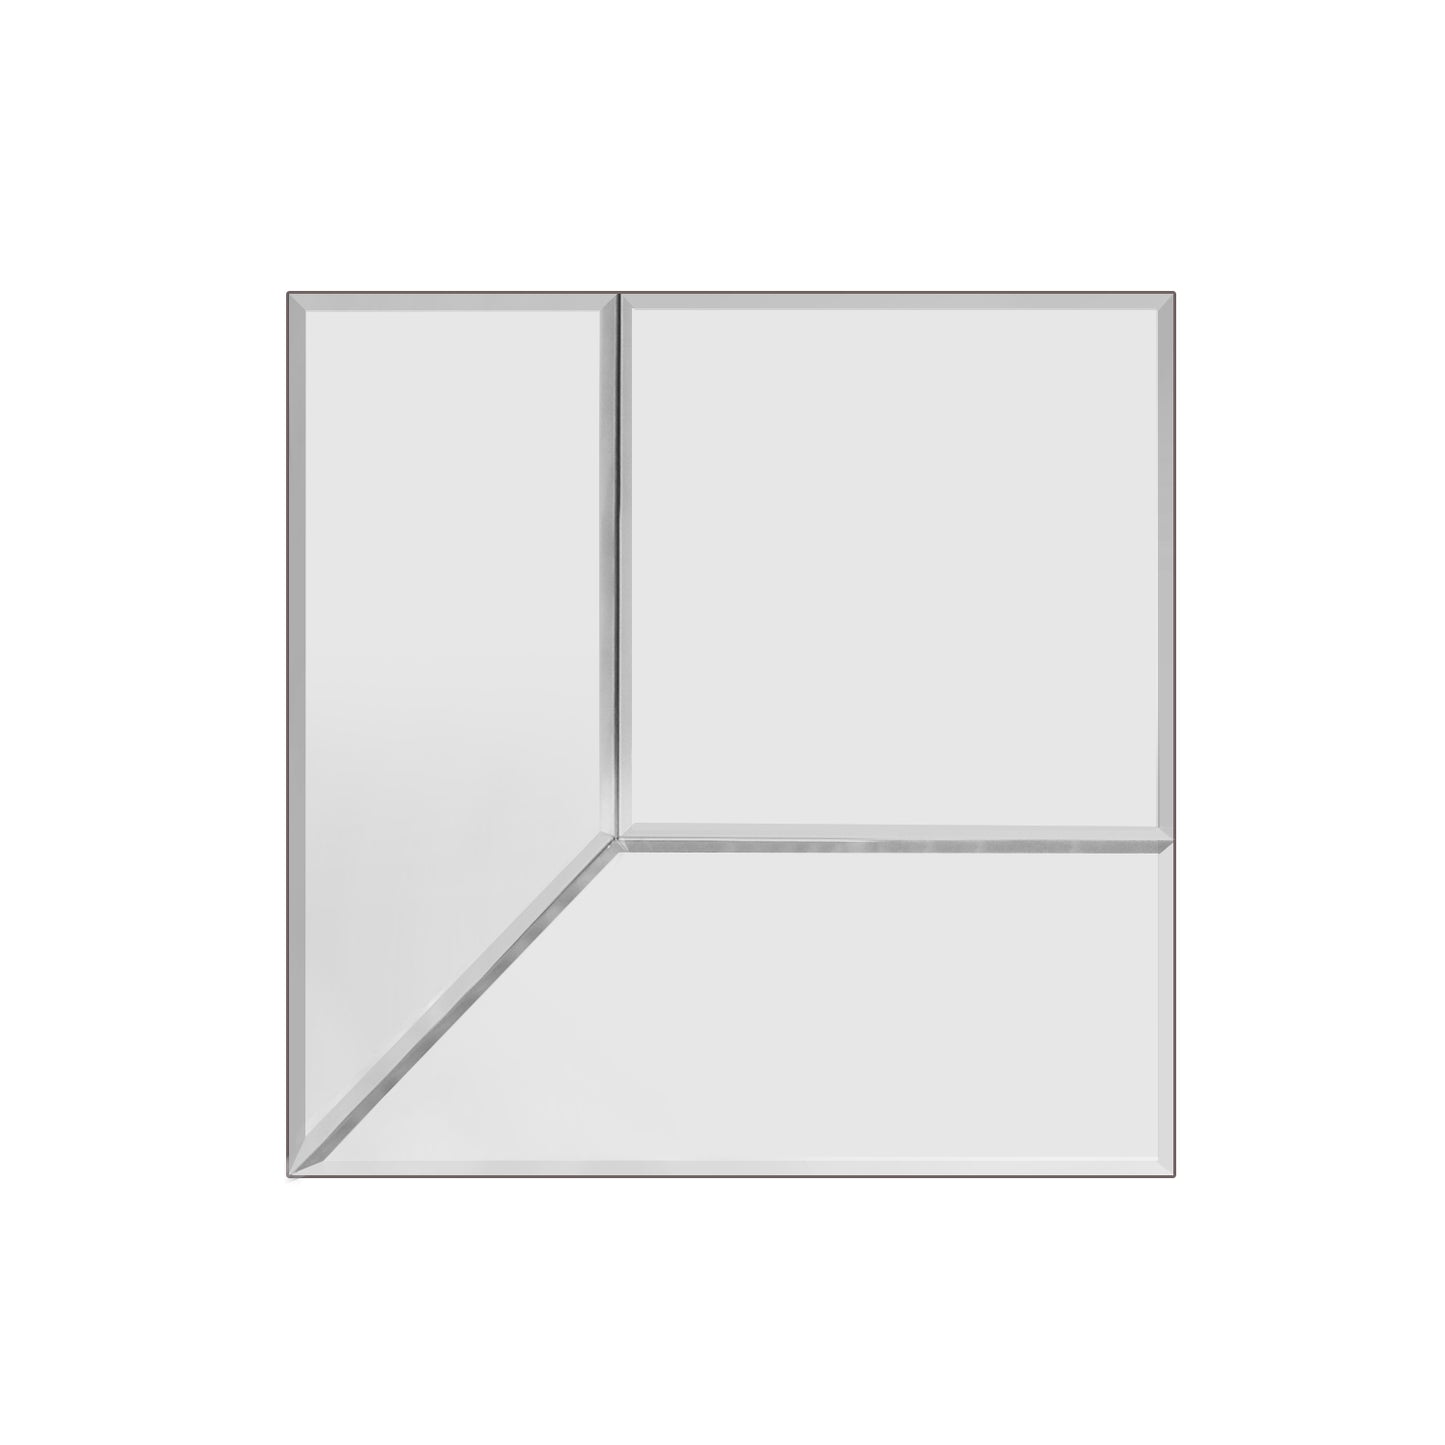 Mosaic Square XL- Mirror - Reversible - Beveled Mirror - Unique Wall Decor